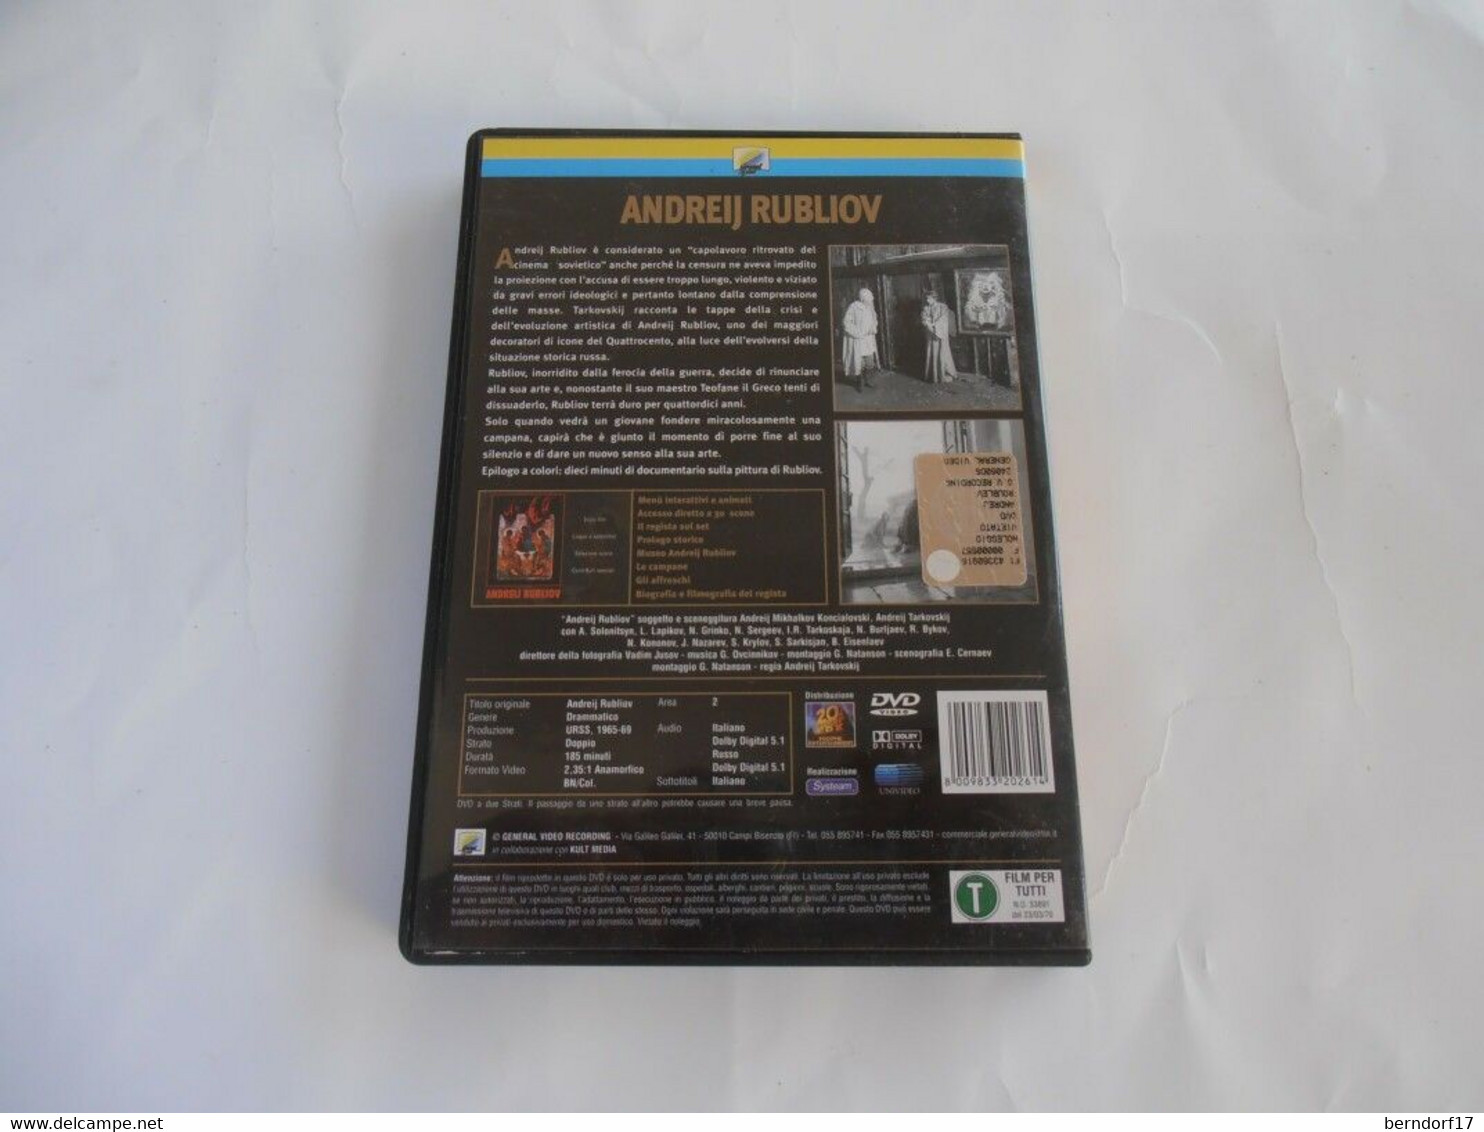 Andrij Tarkovskij - Andreij Rubliov - DVD - DVD Musicaux